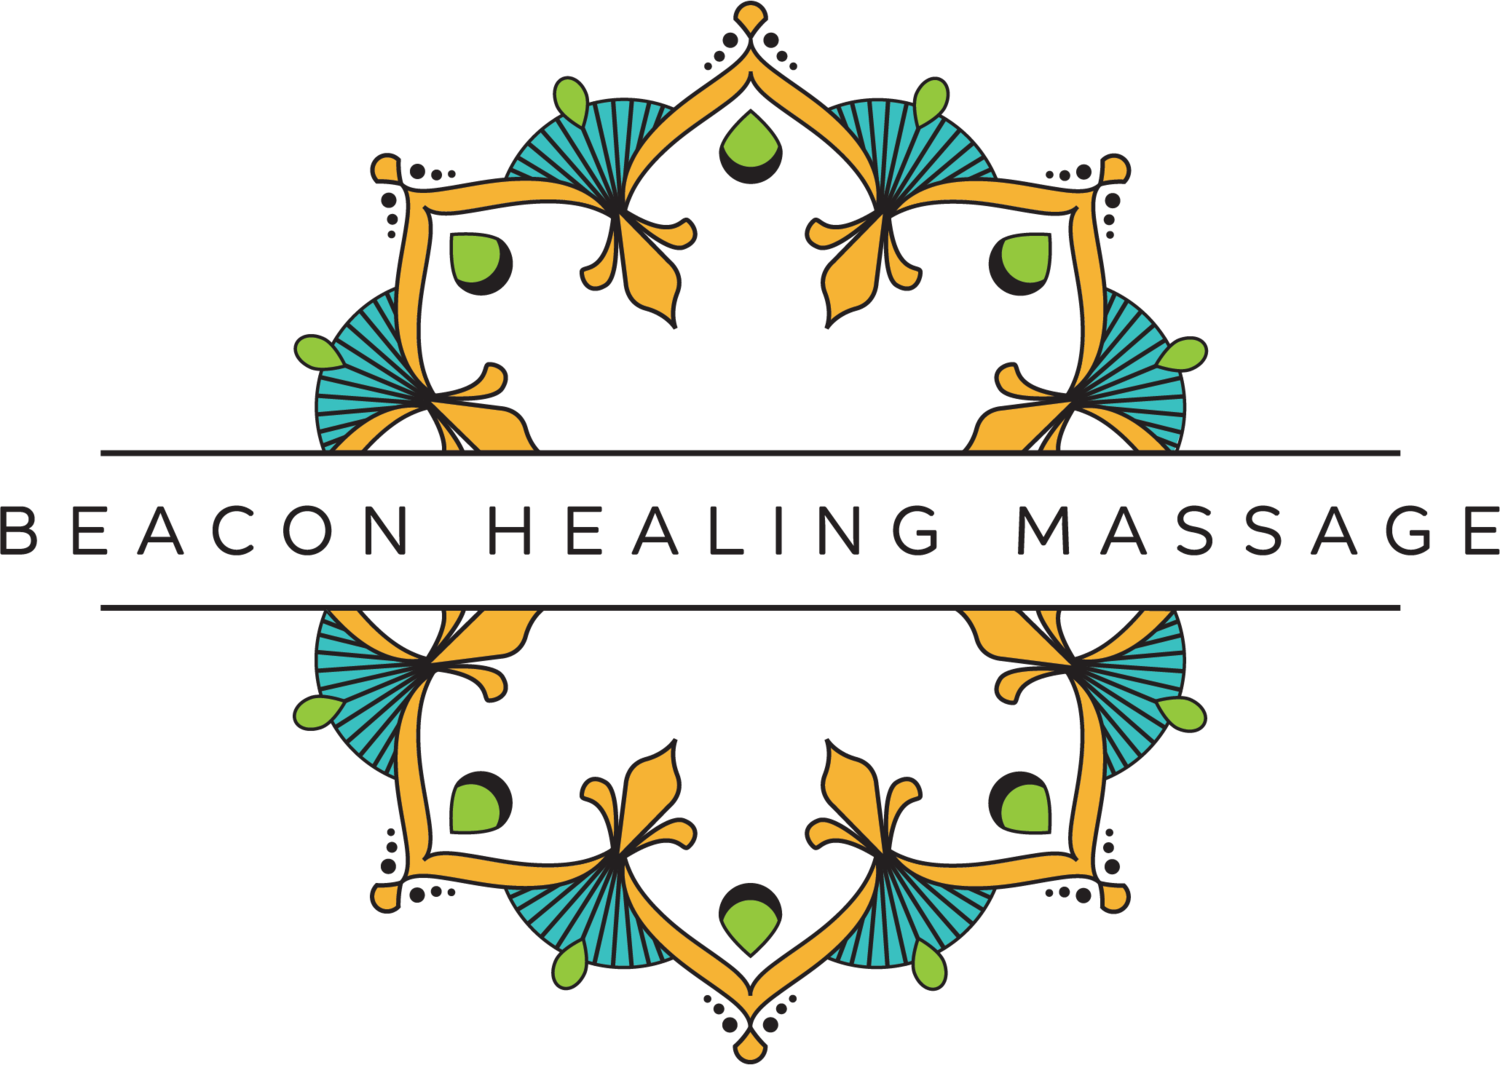 Beacon Healing Massage